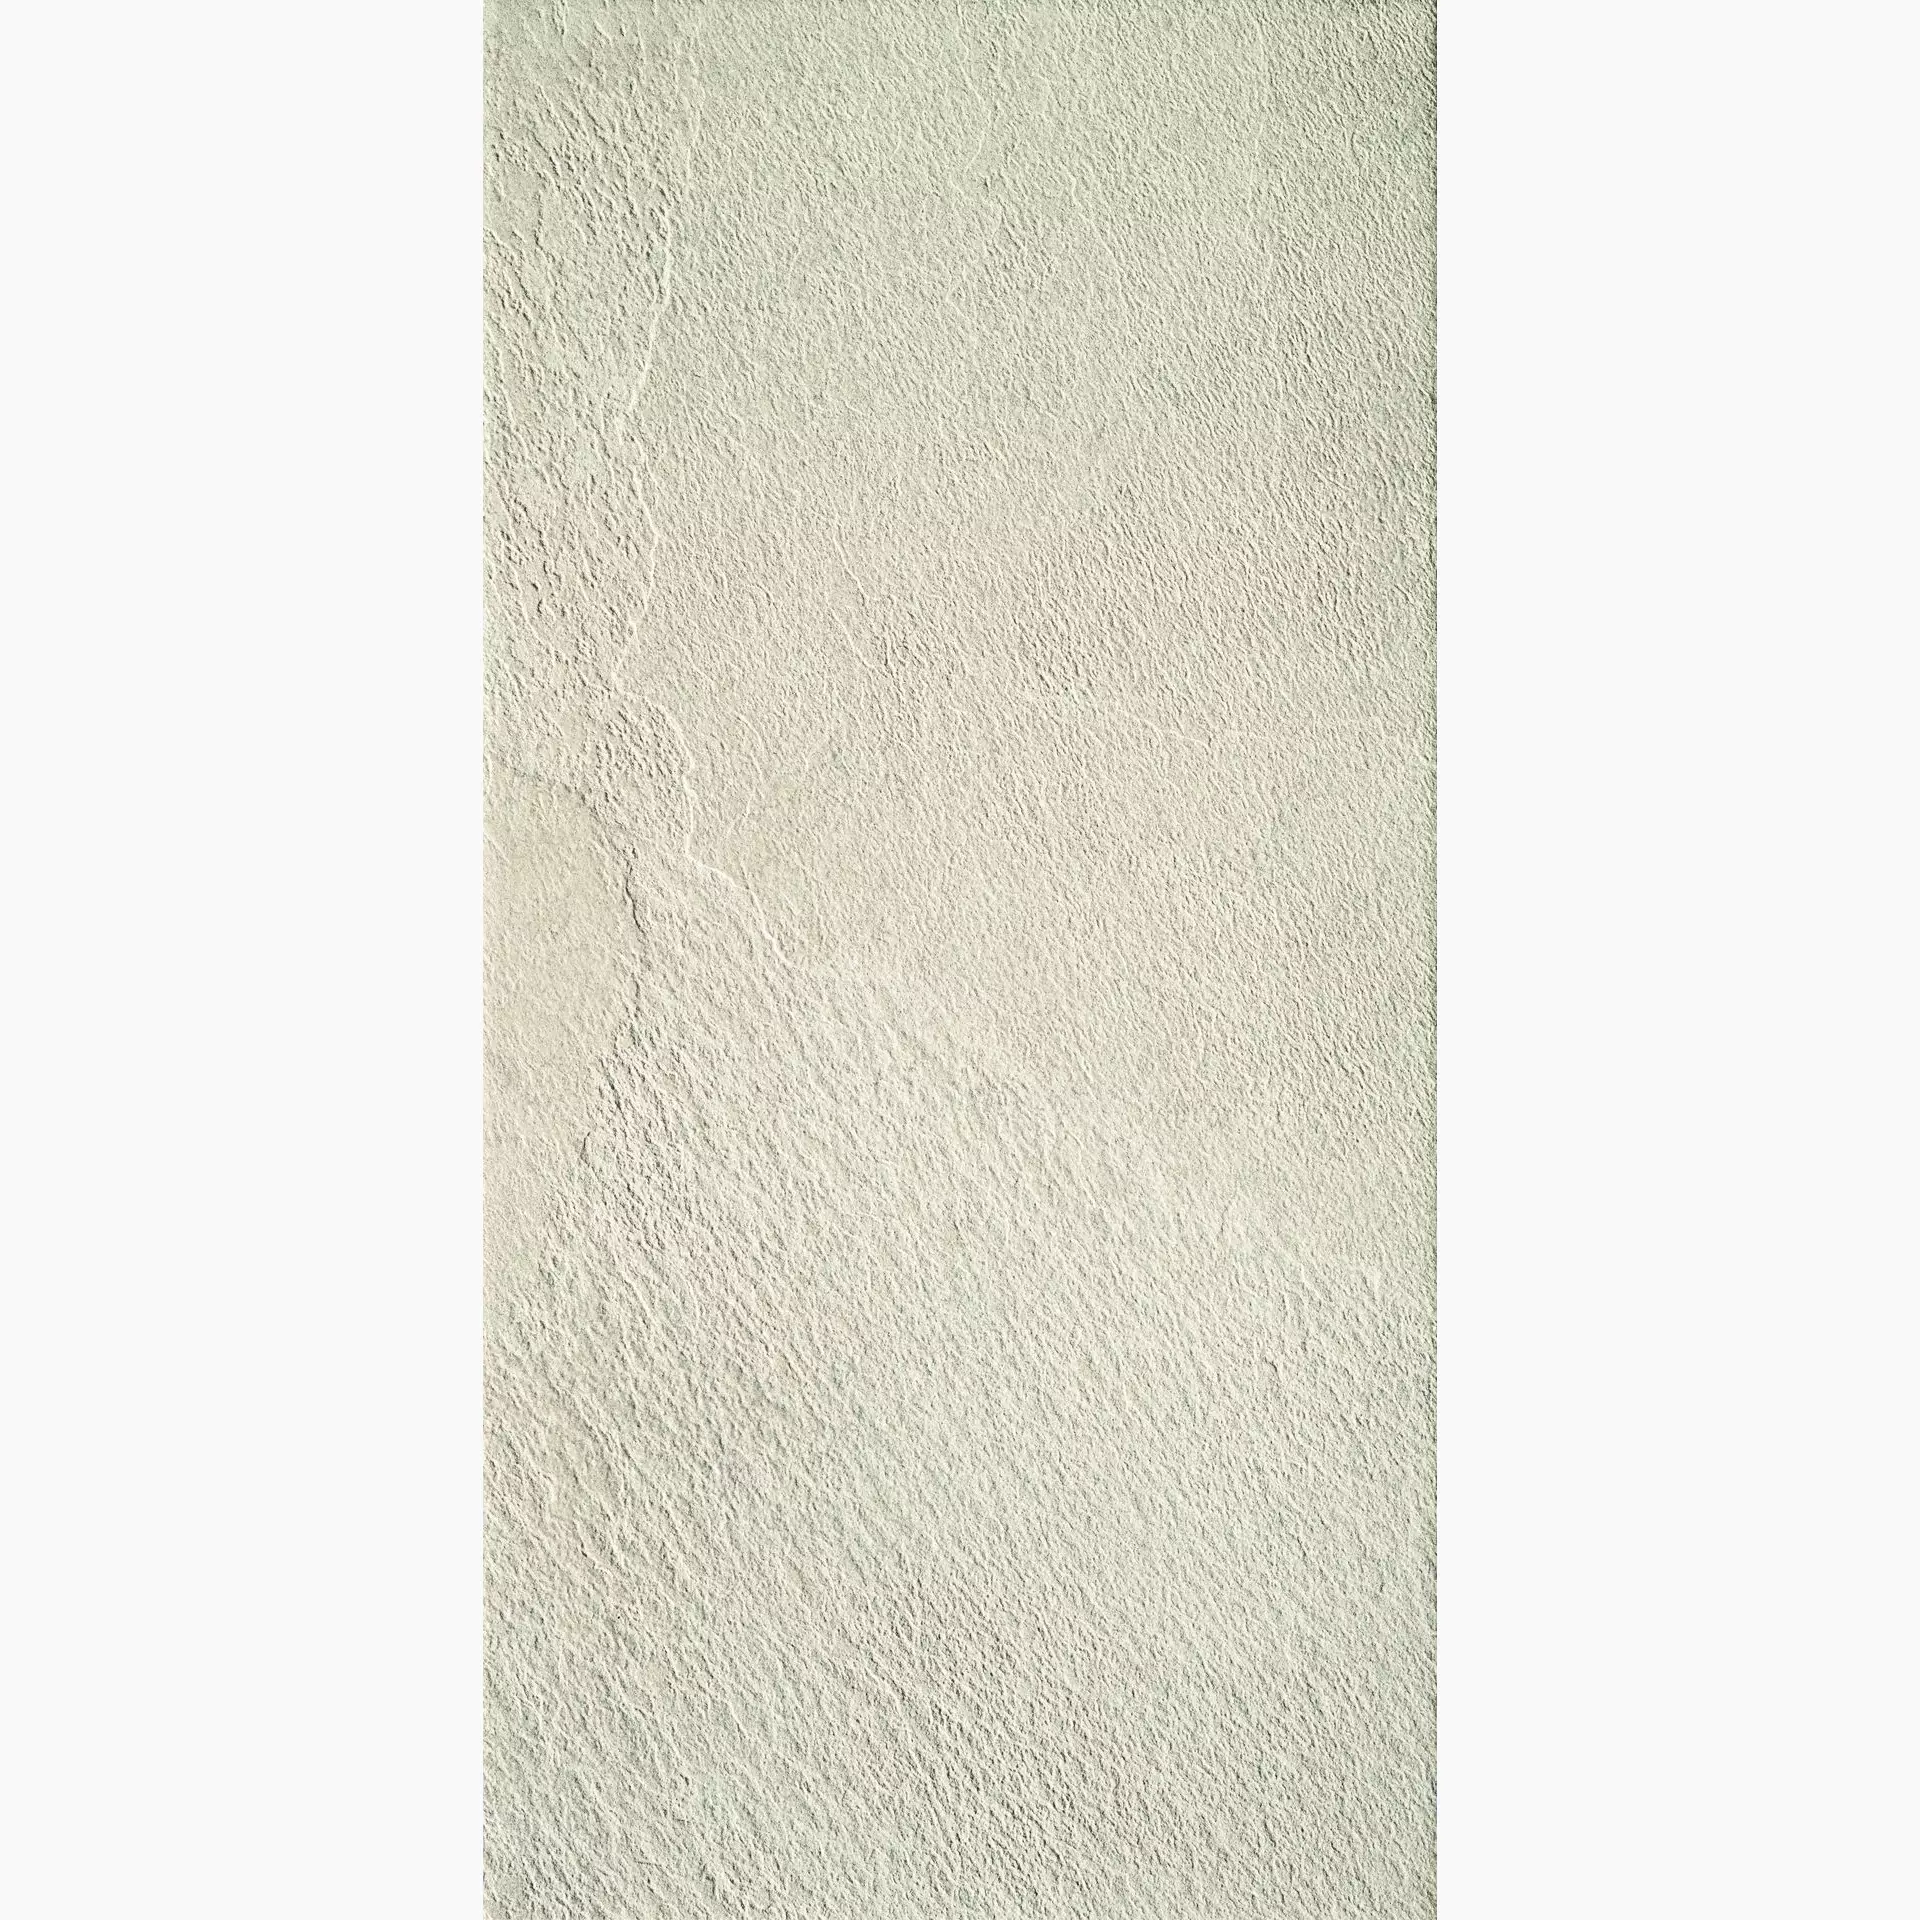 Casalgrande Mineral Chrom White Naturale – Matt 6790061 30x60cm rektifiziert 9mm